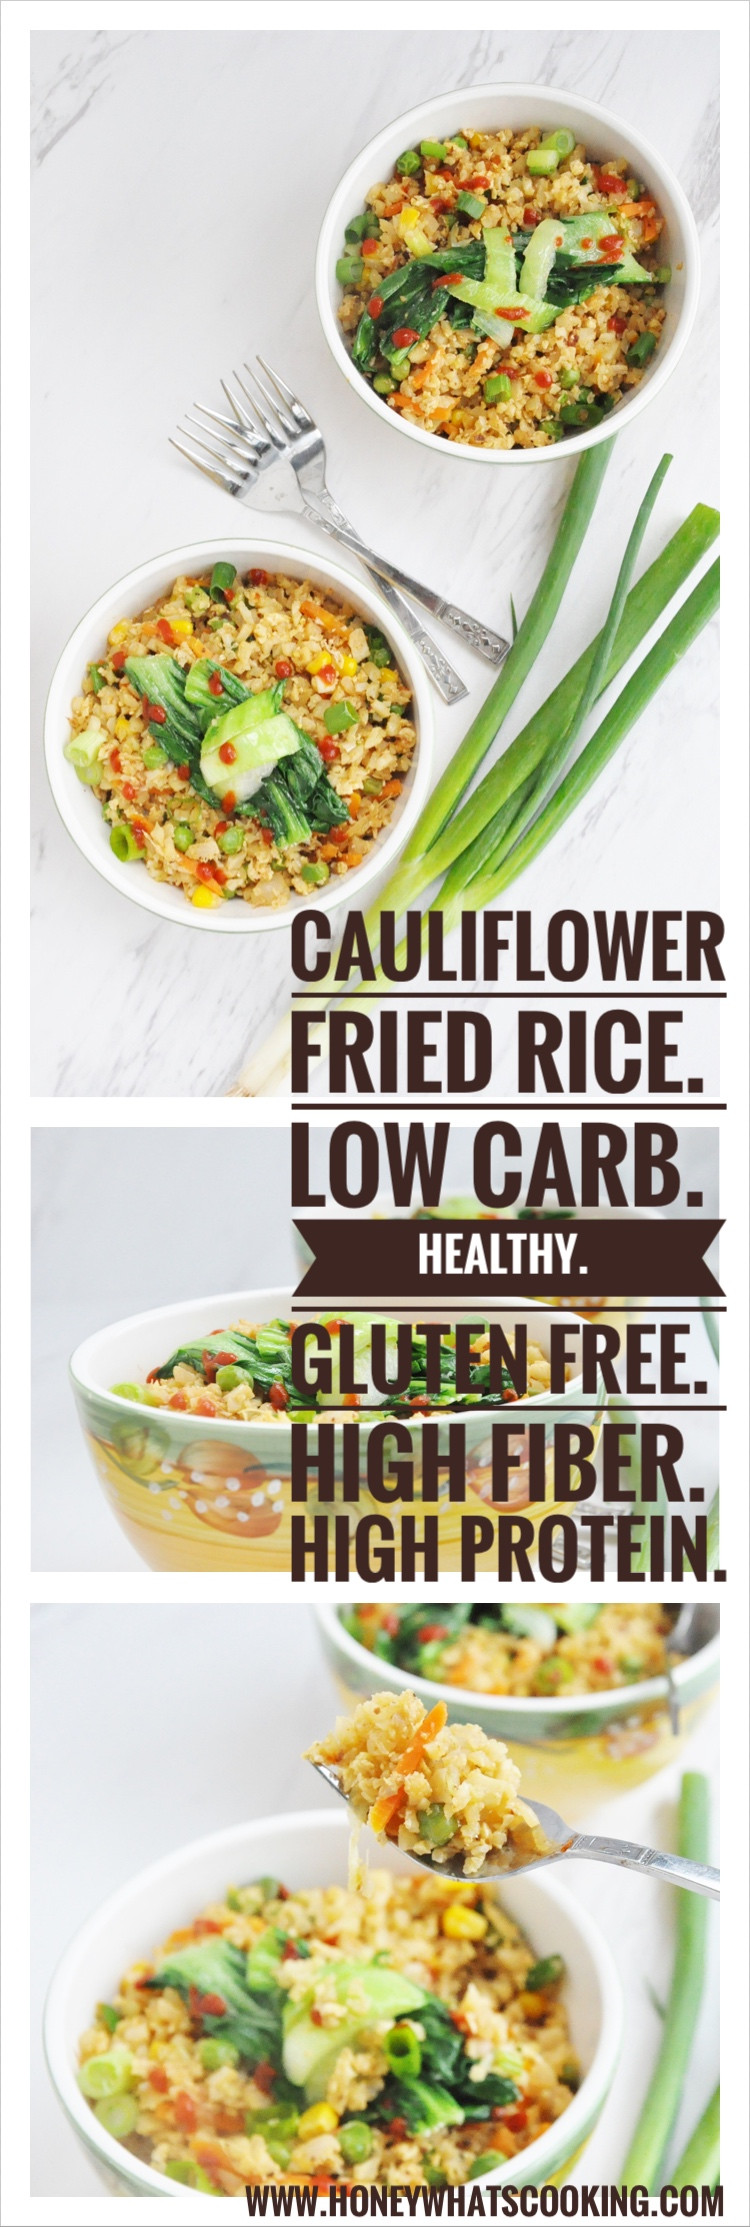 High Protein High Fiber Recipes
 Cauliflower Fried Rice low carb high protein gluten